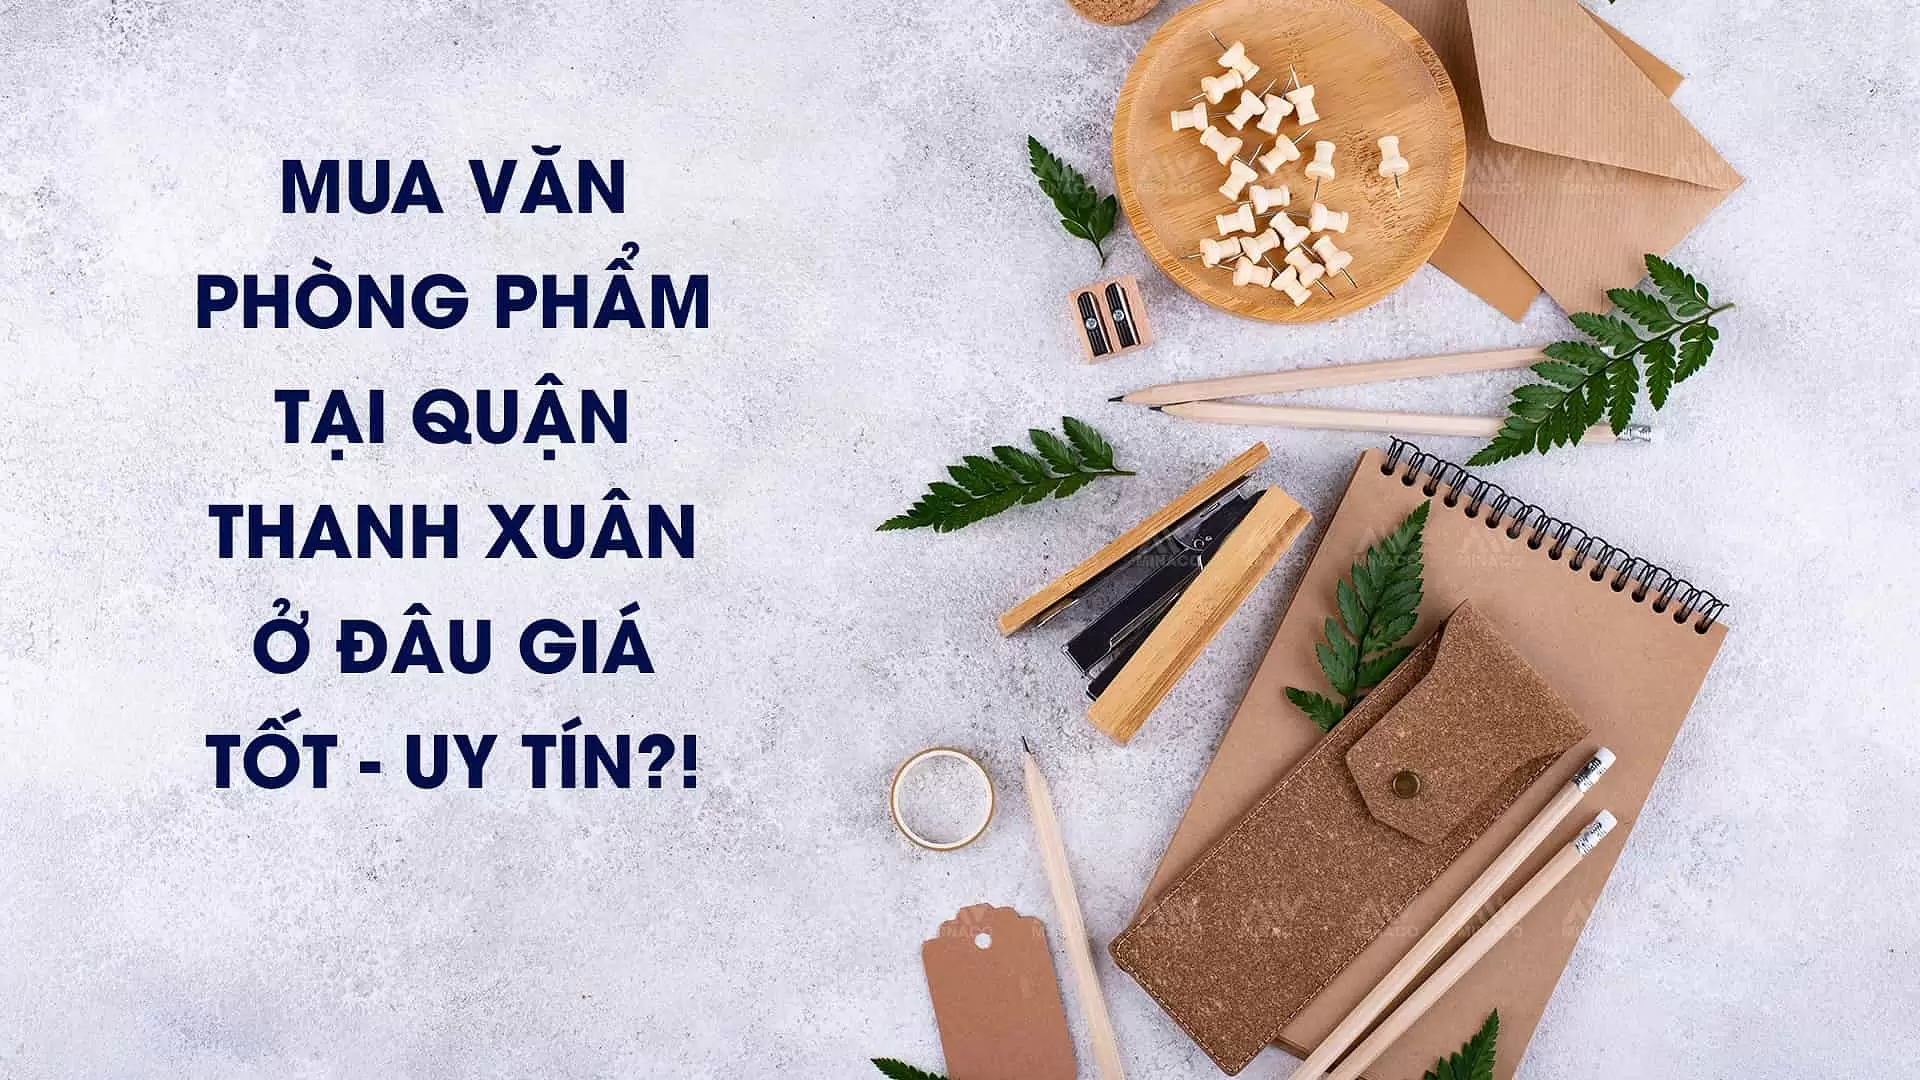 Mua Van Phong Pham Thanh Xuan O Dau Gia Tot Uy Tin